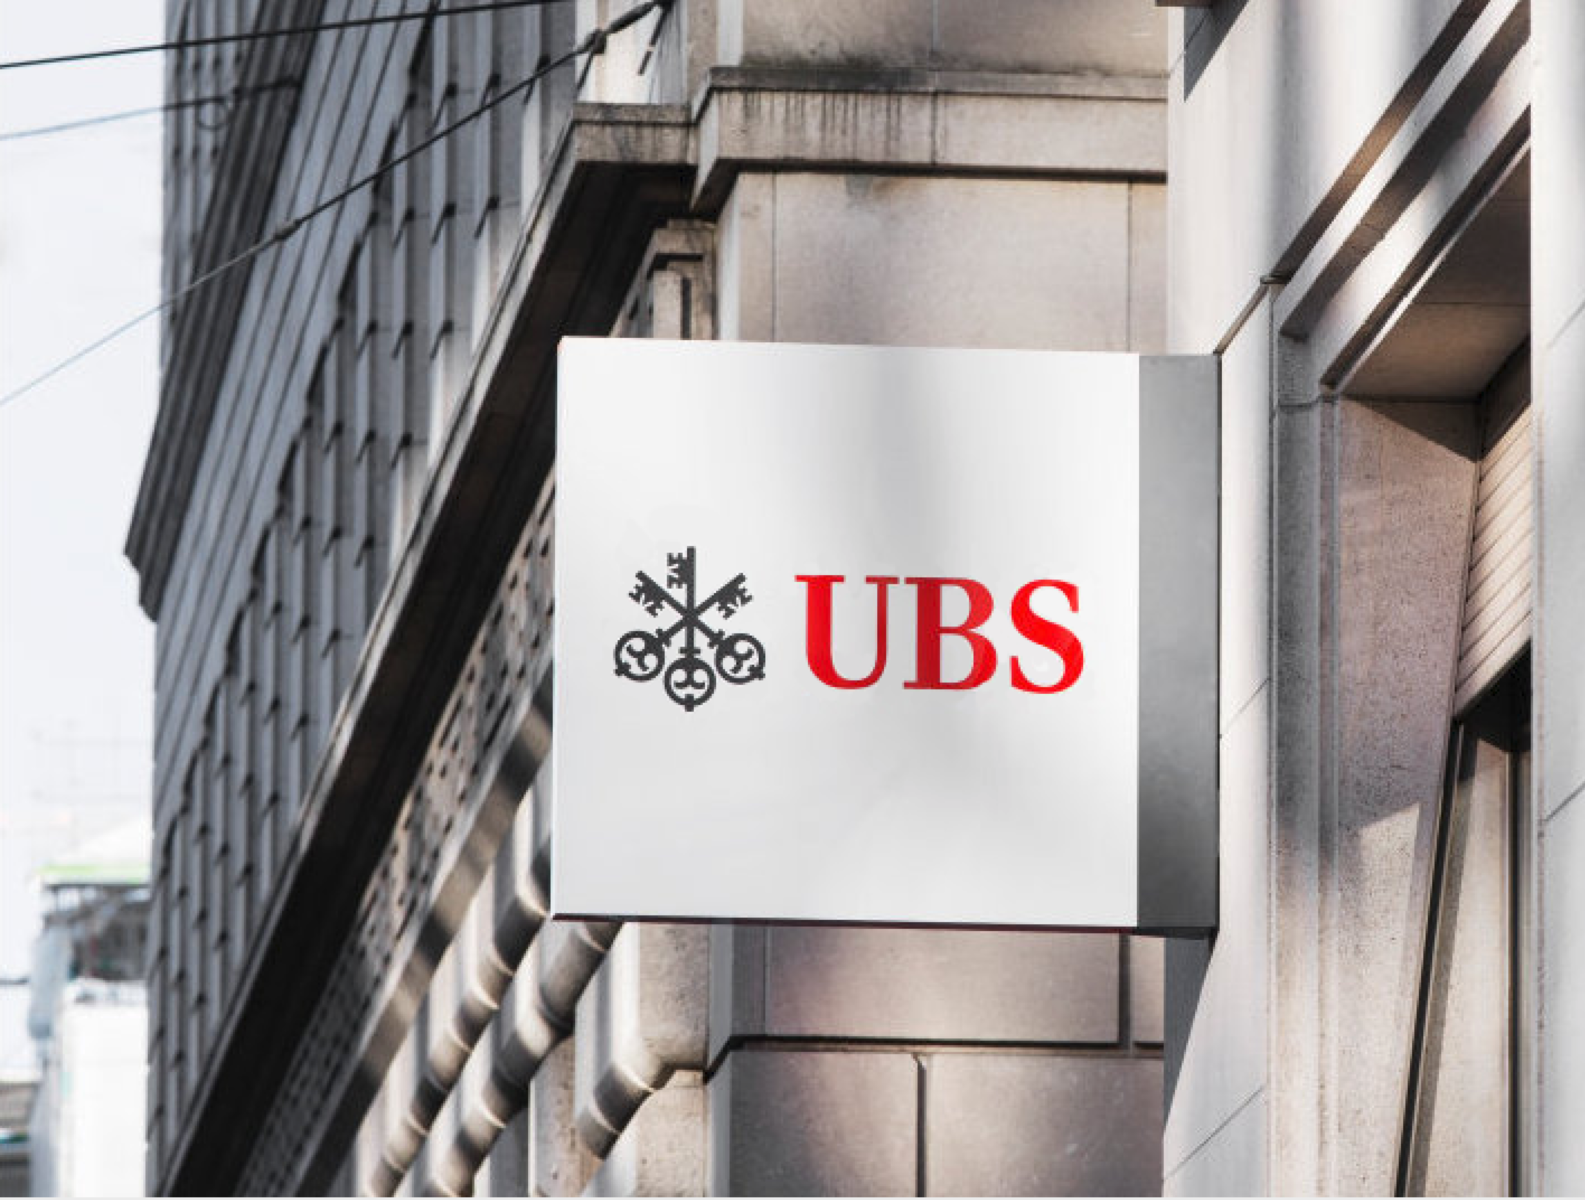 Банку ubs. UBS банк. Банки Швейцарии UBS. Логотипы швейцарских банков. ЮБС швейцарский банк.